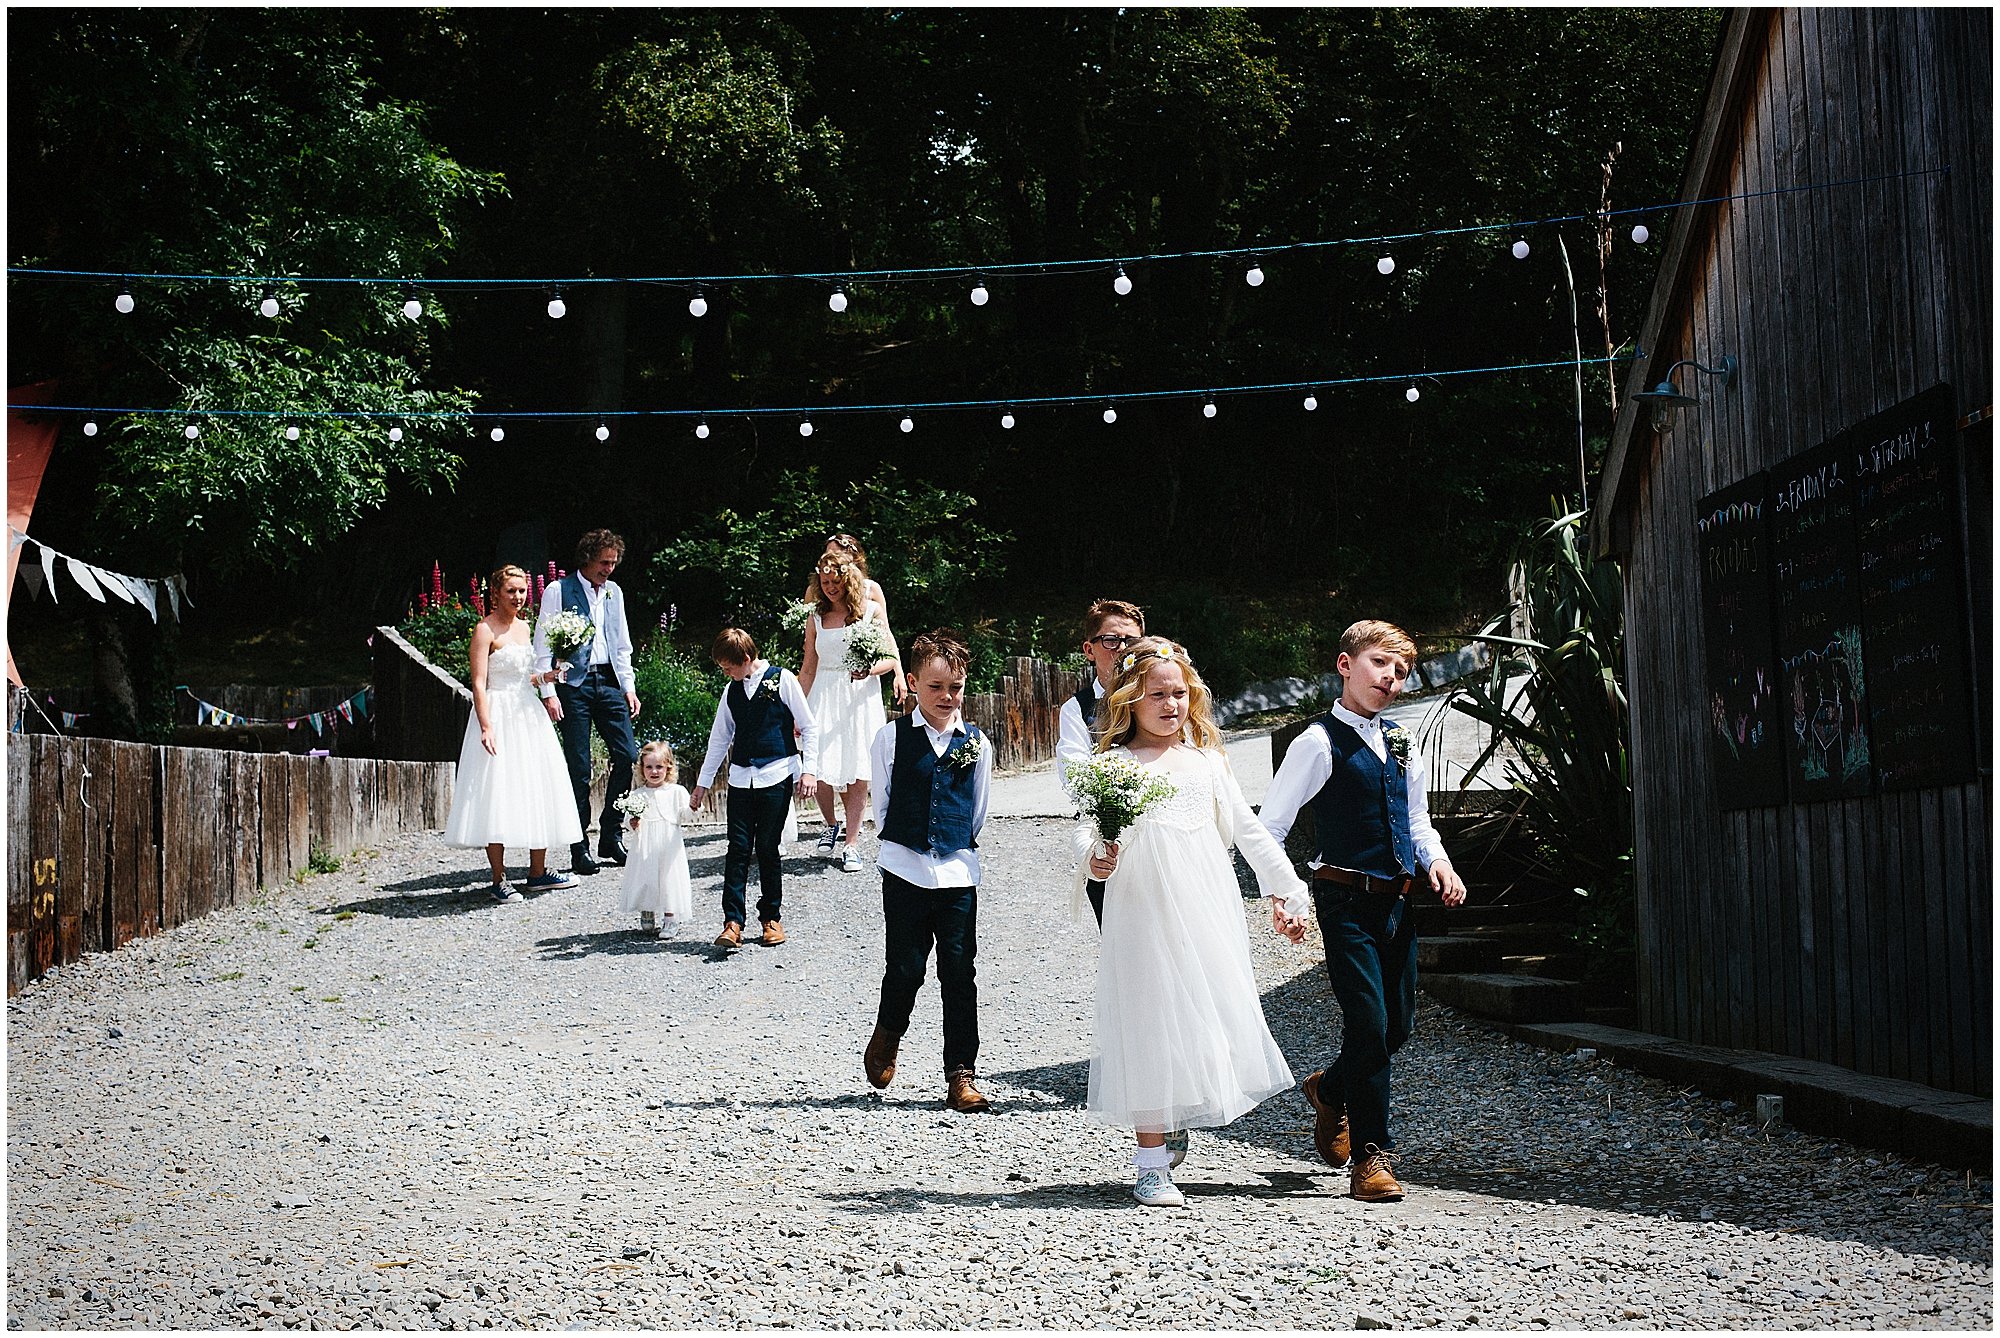 fforest-wales-wedding-photography-artistic-claudia-rose-carter-amie-craig-1226.jpg